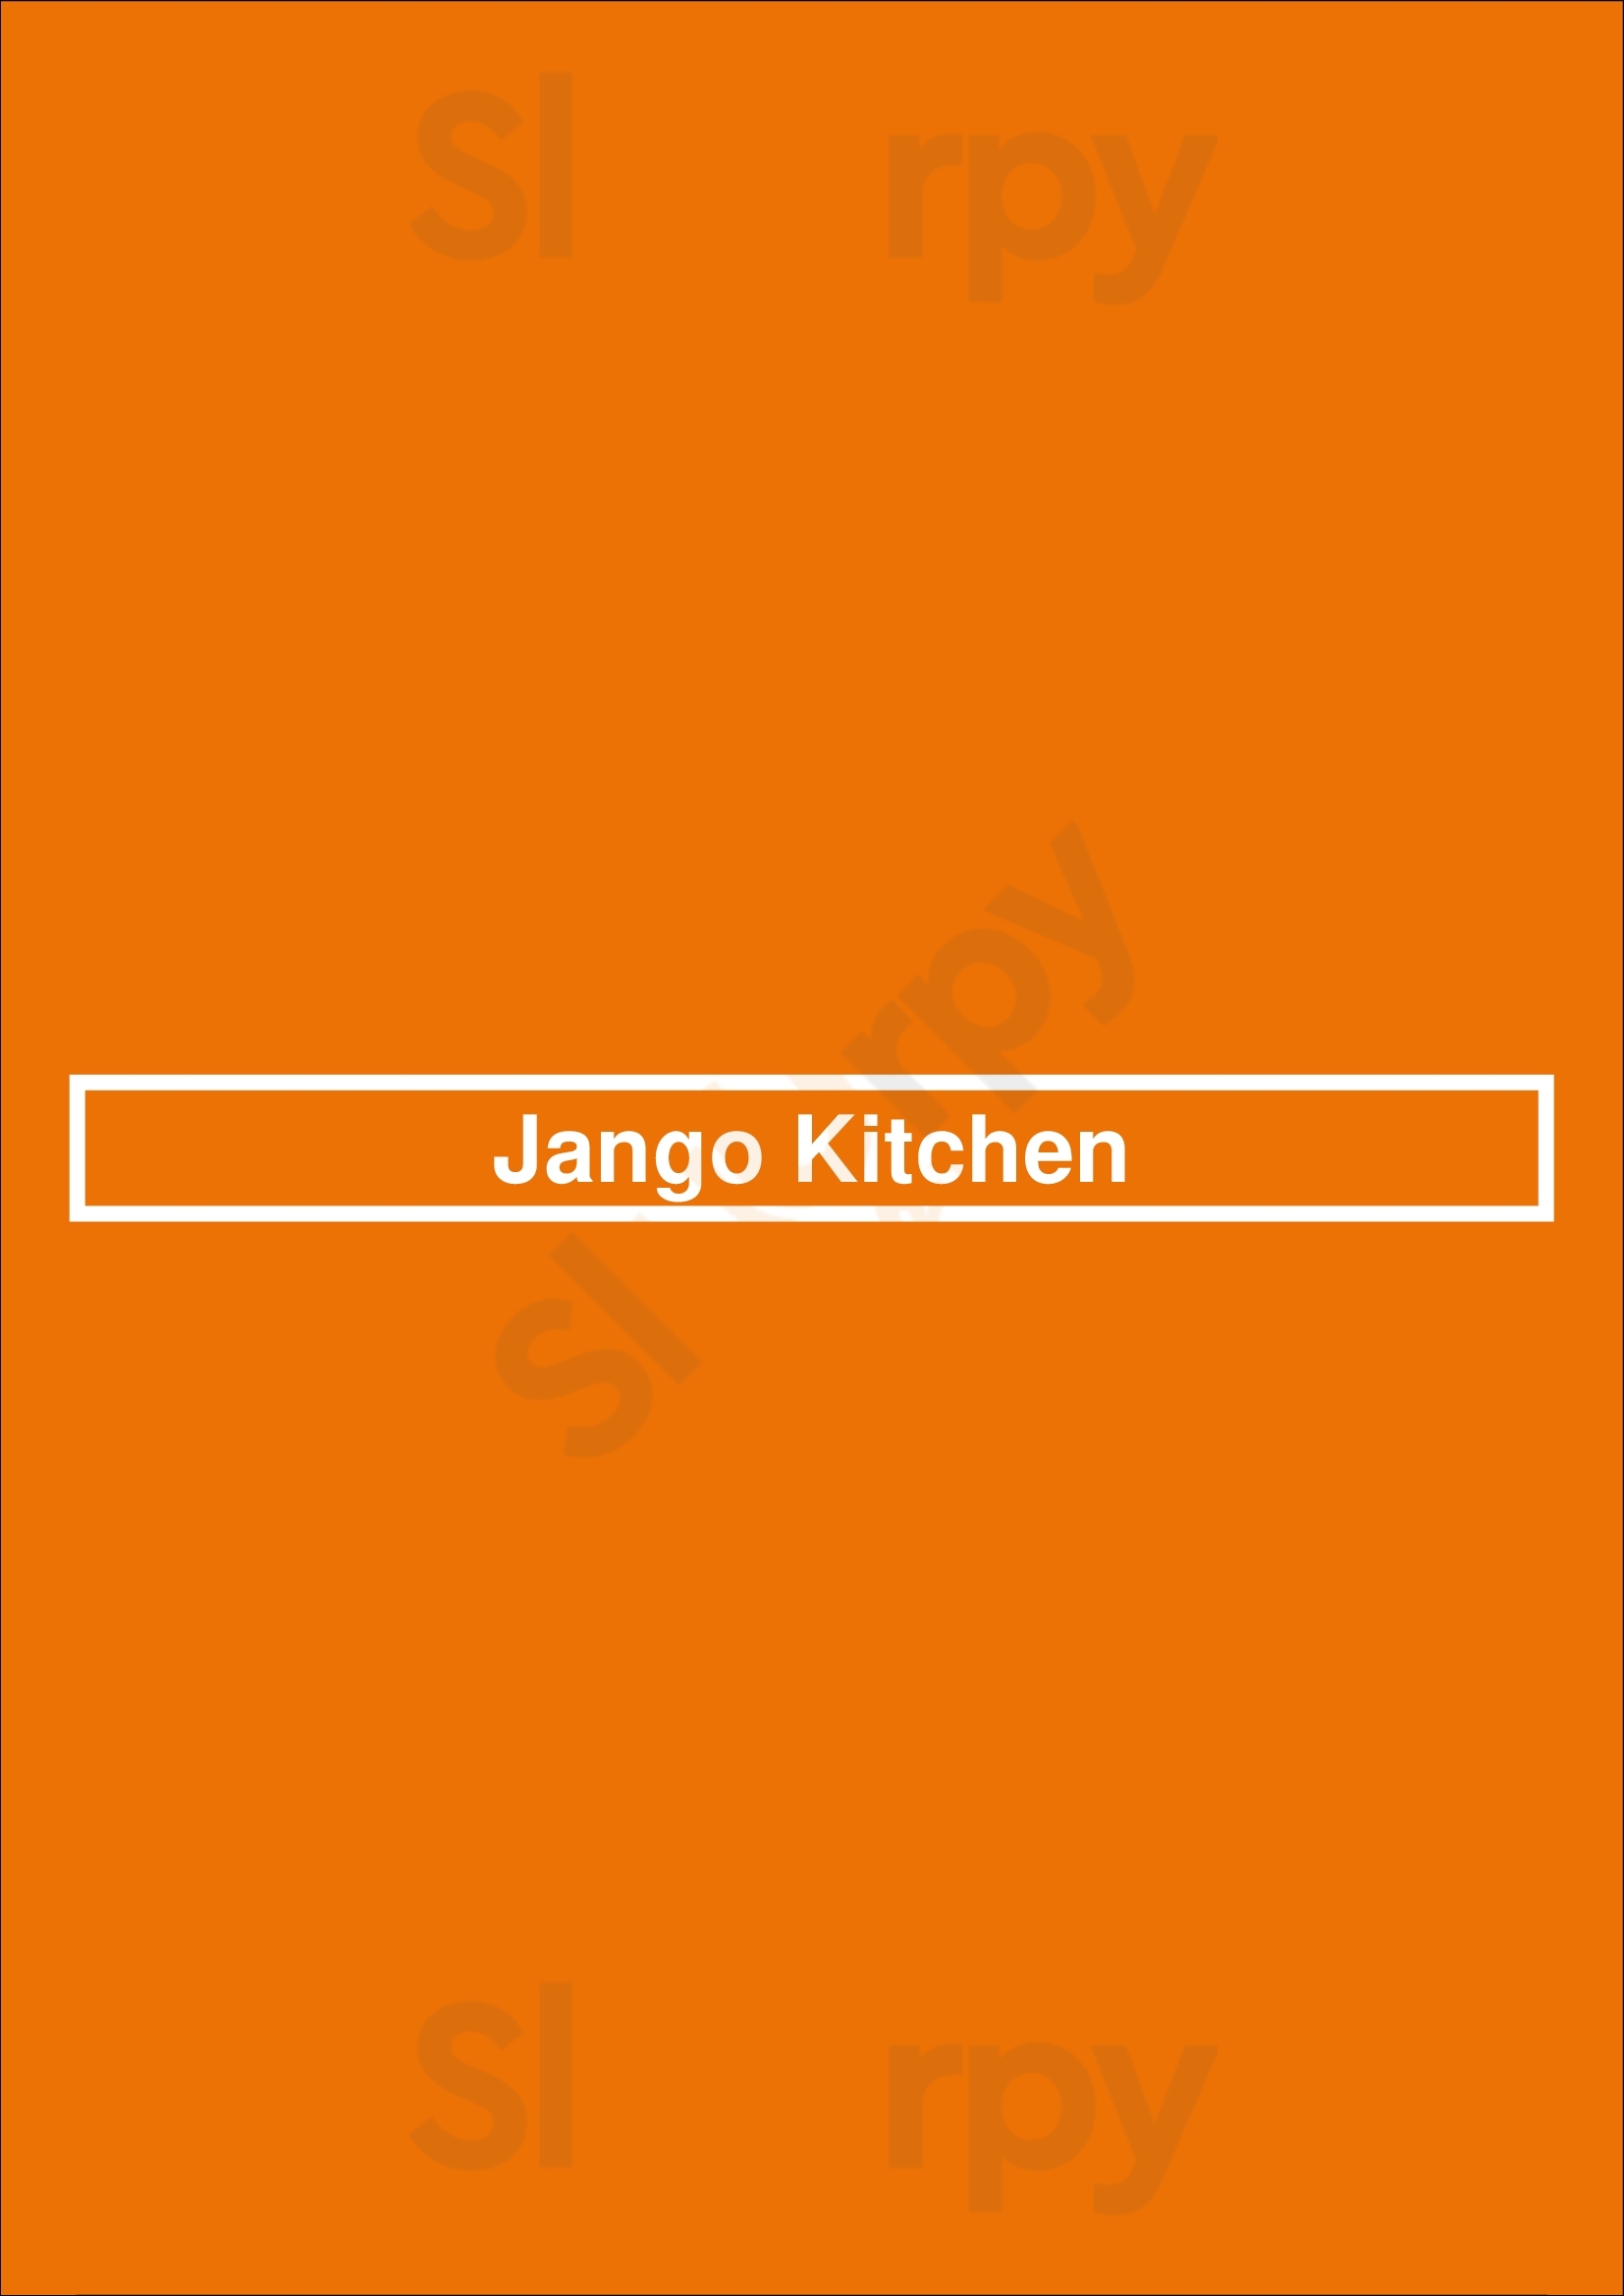 Jango Kitchen London Menu - 1